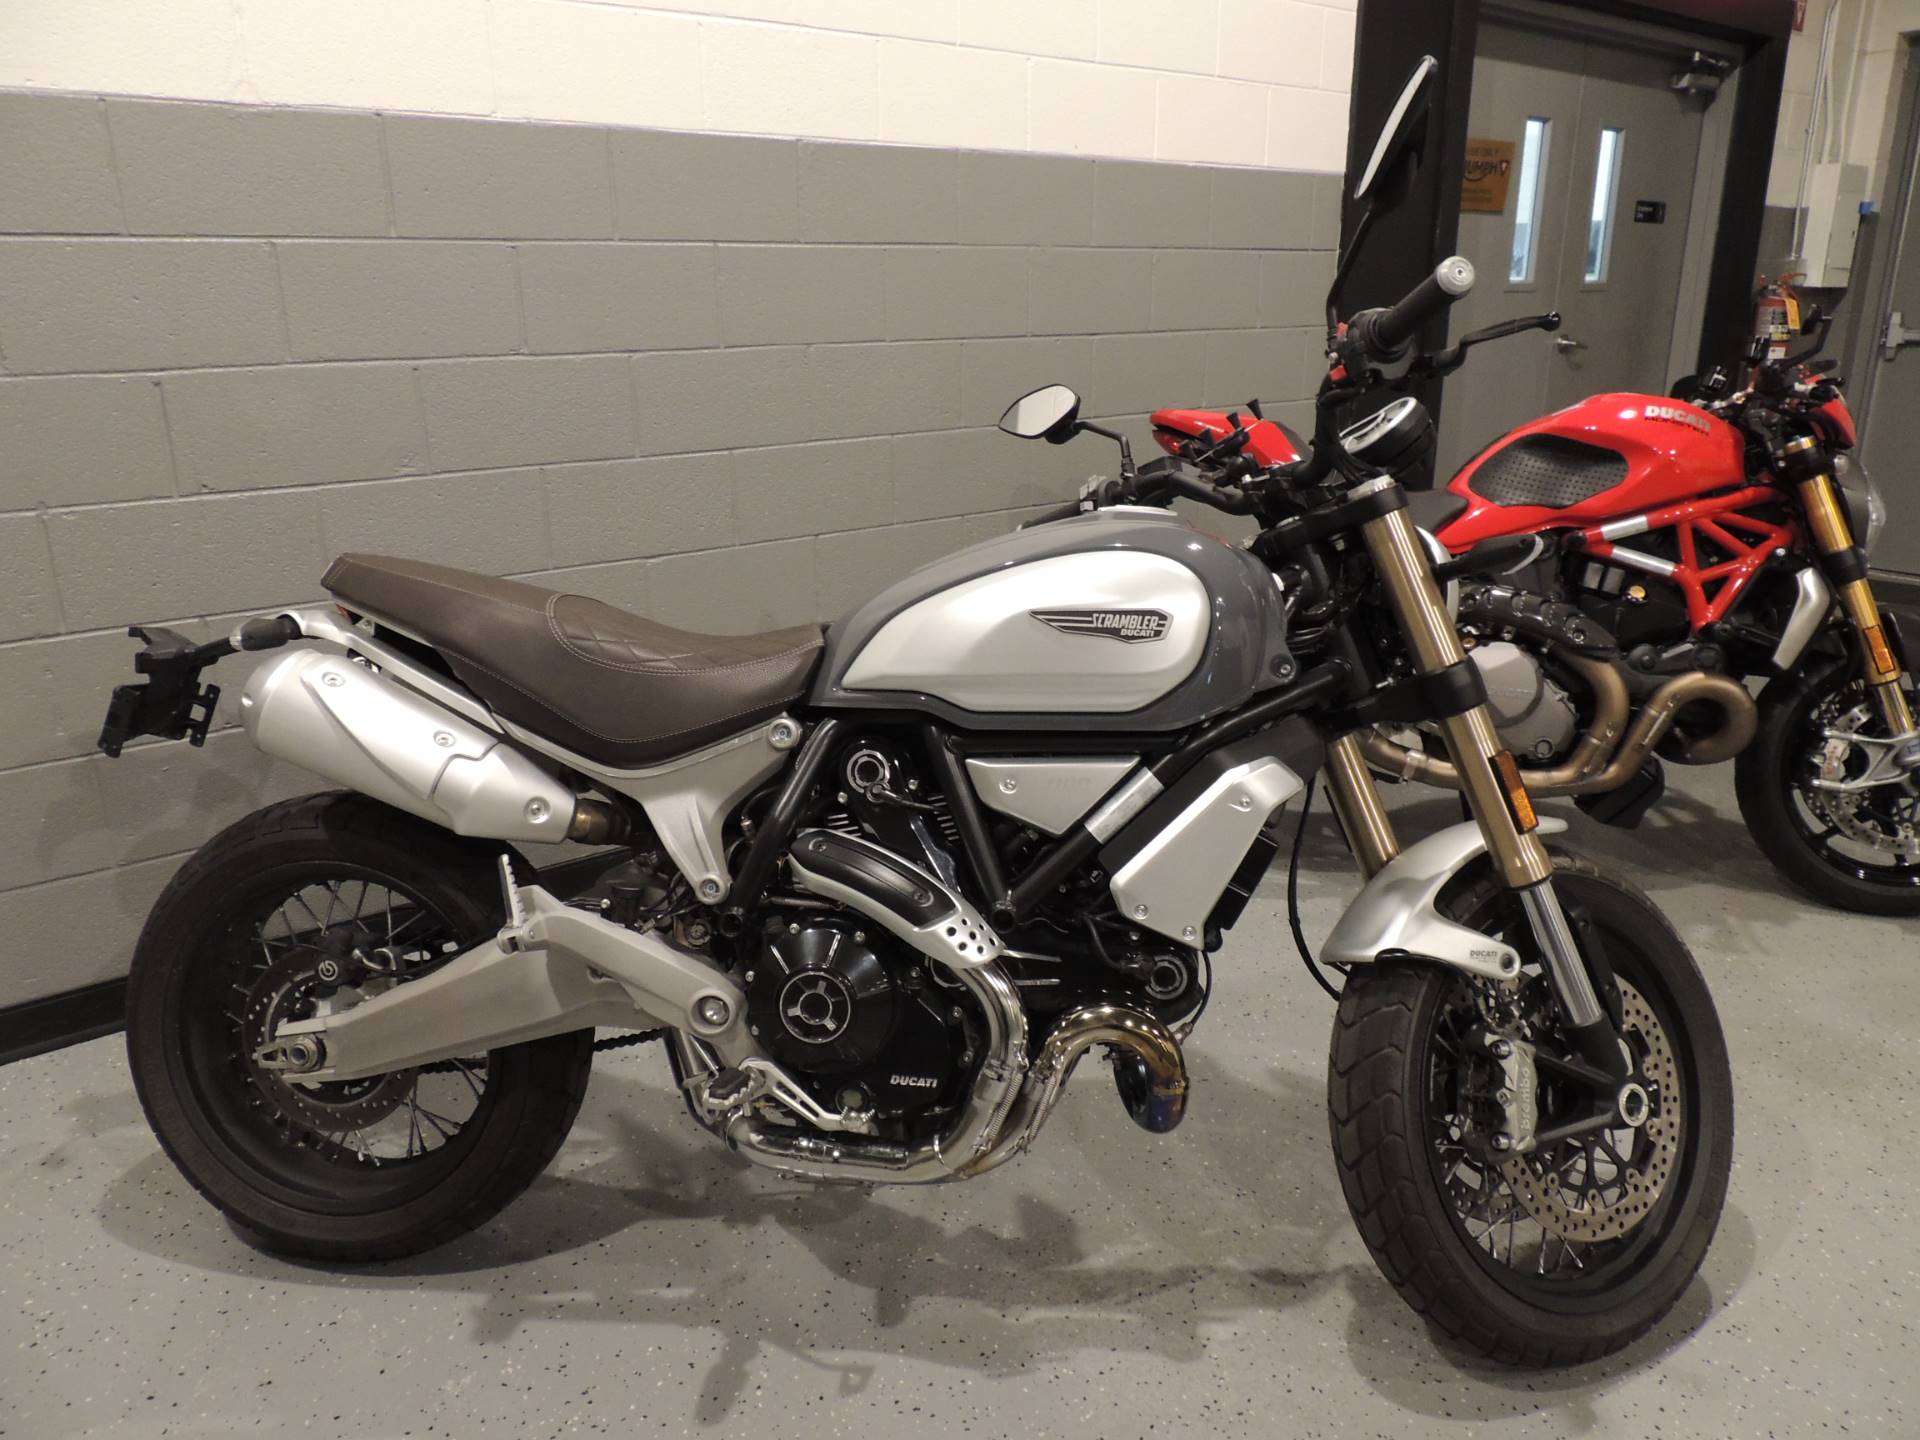 Used 2018 Ducati Scrambler 1100 Special Motorcycles In Shelby Township Mi 000522 Custom Grey